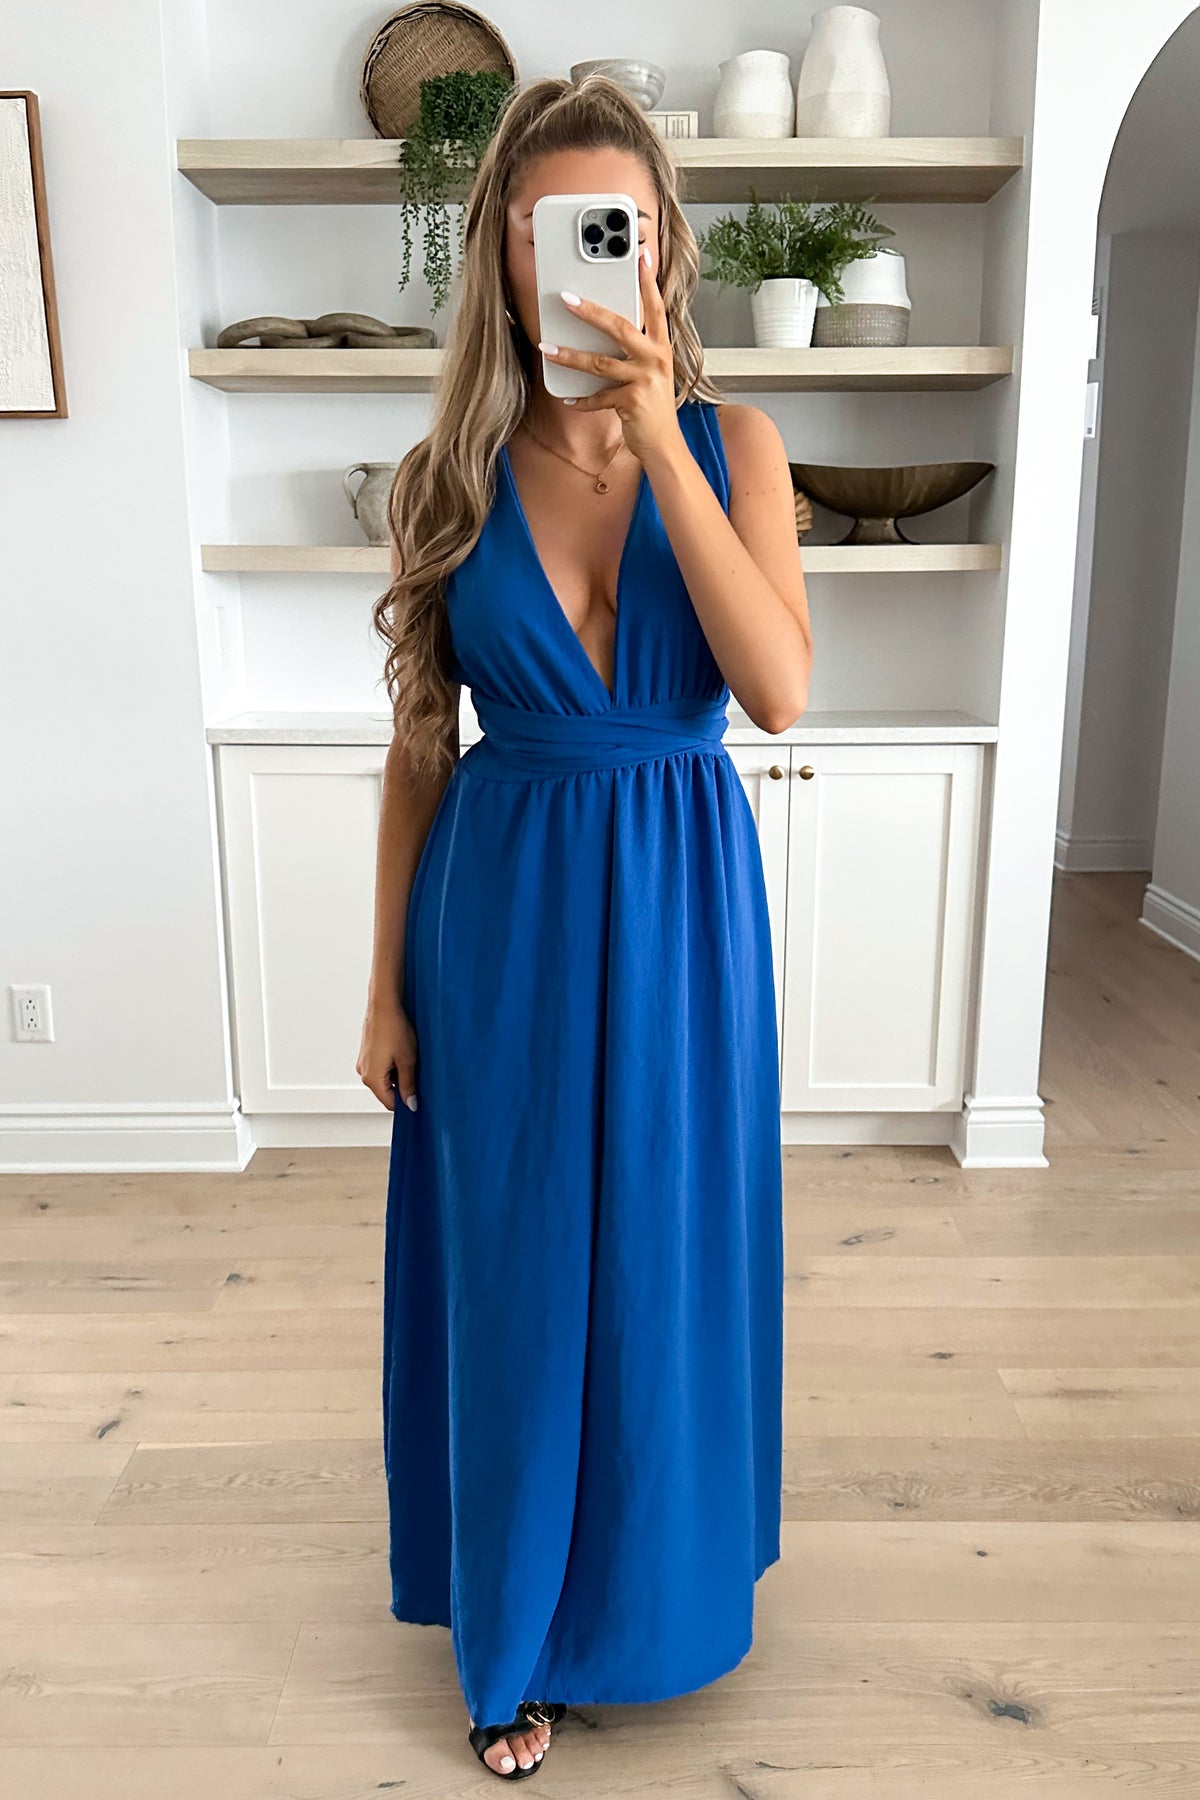 SHAYLA - Blue Dress